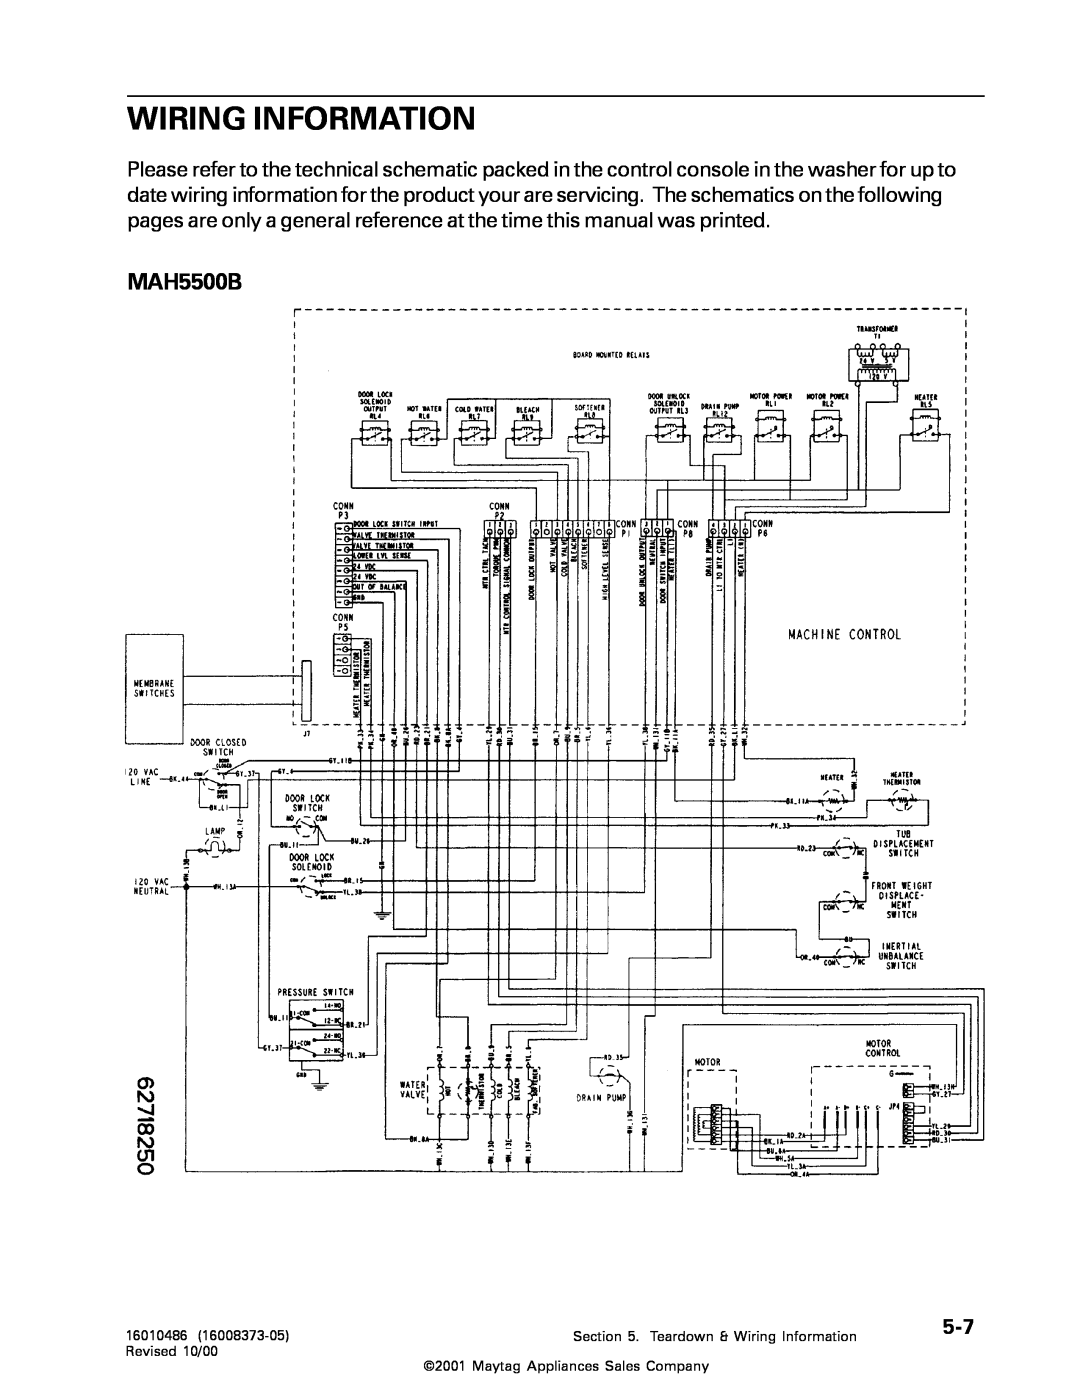 Whirlpool MAH3000 service manual MAH5500B, 16010486, Teardown & Wiring Information 